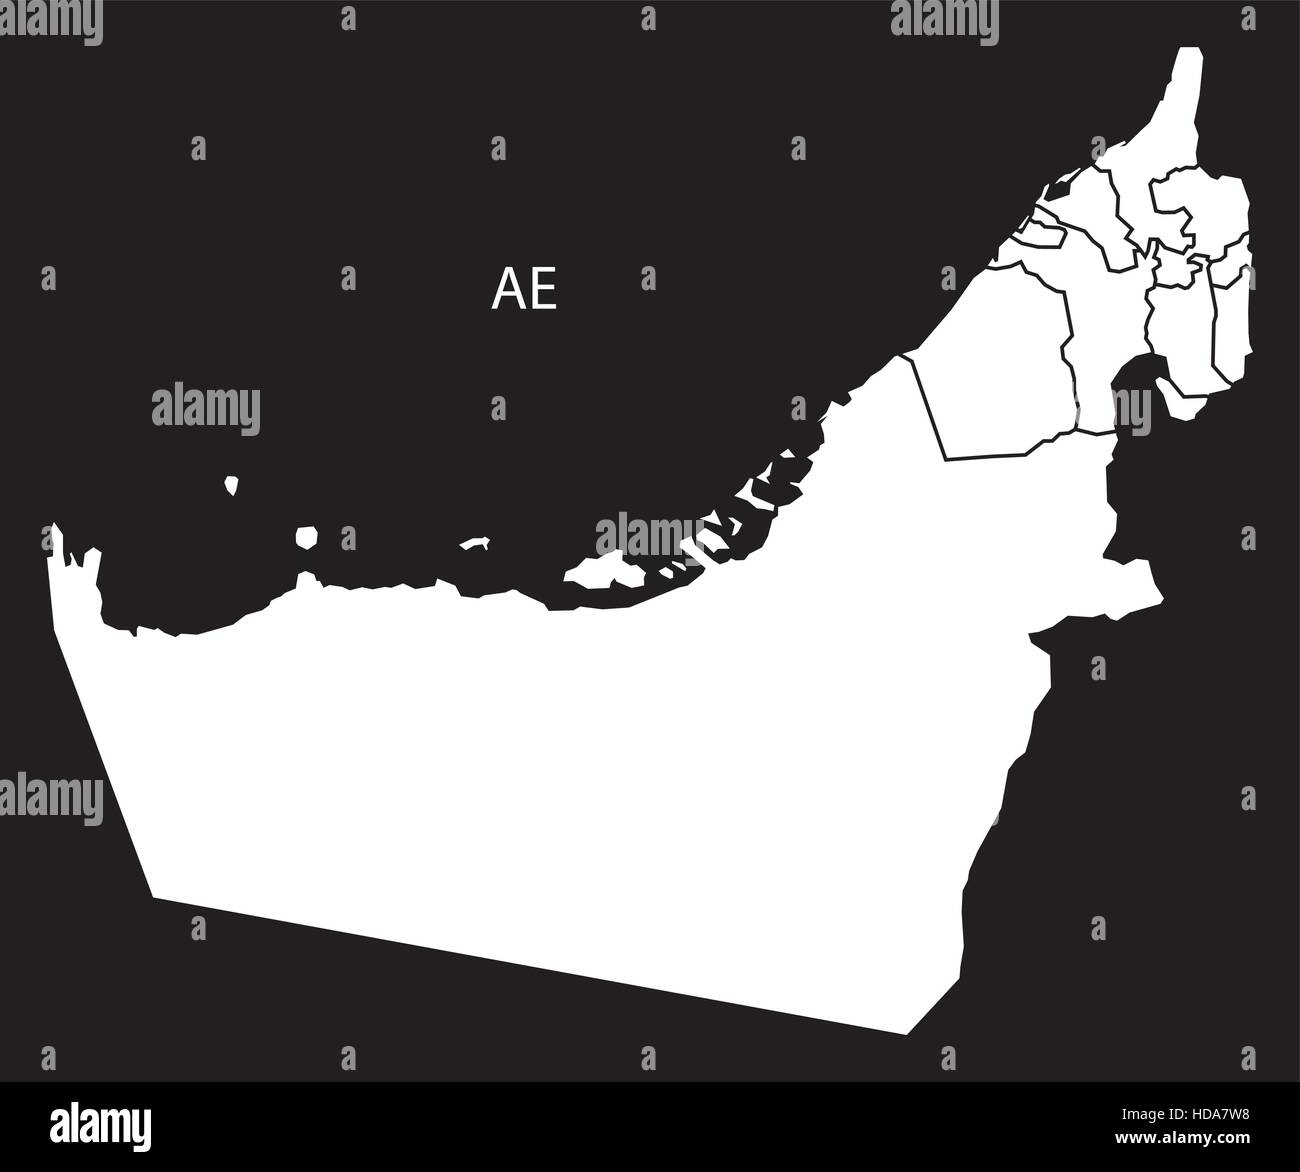 United Arab Emirates with emirates Map black and white illustration Stock Vector